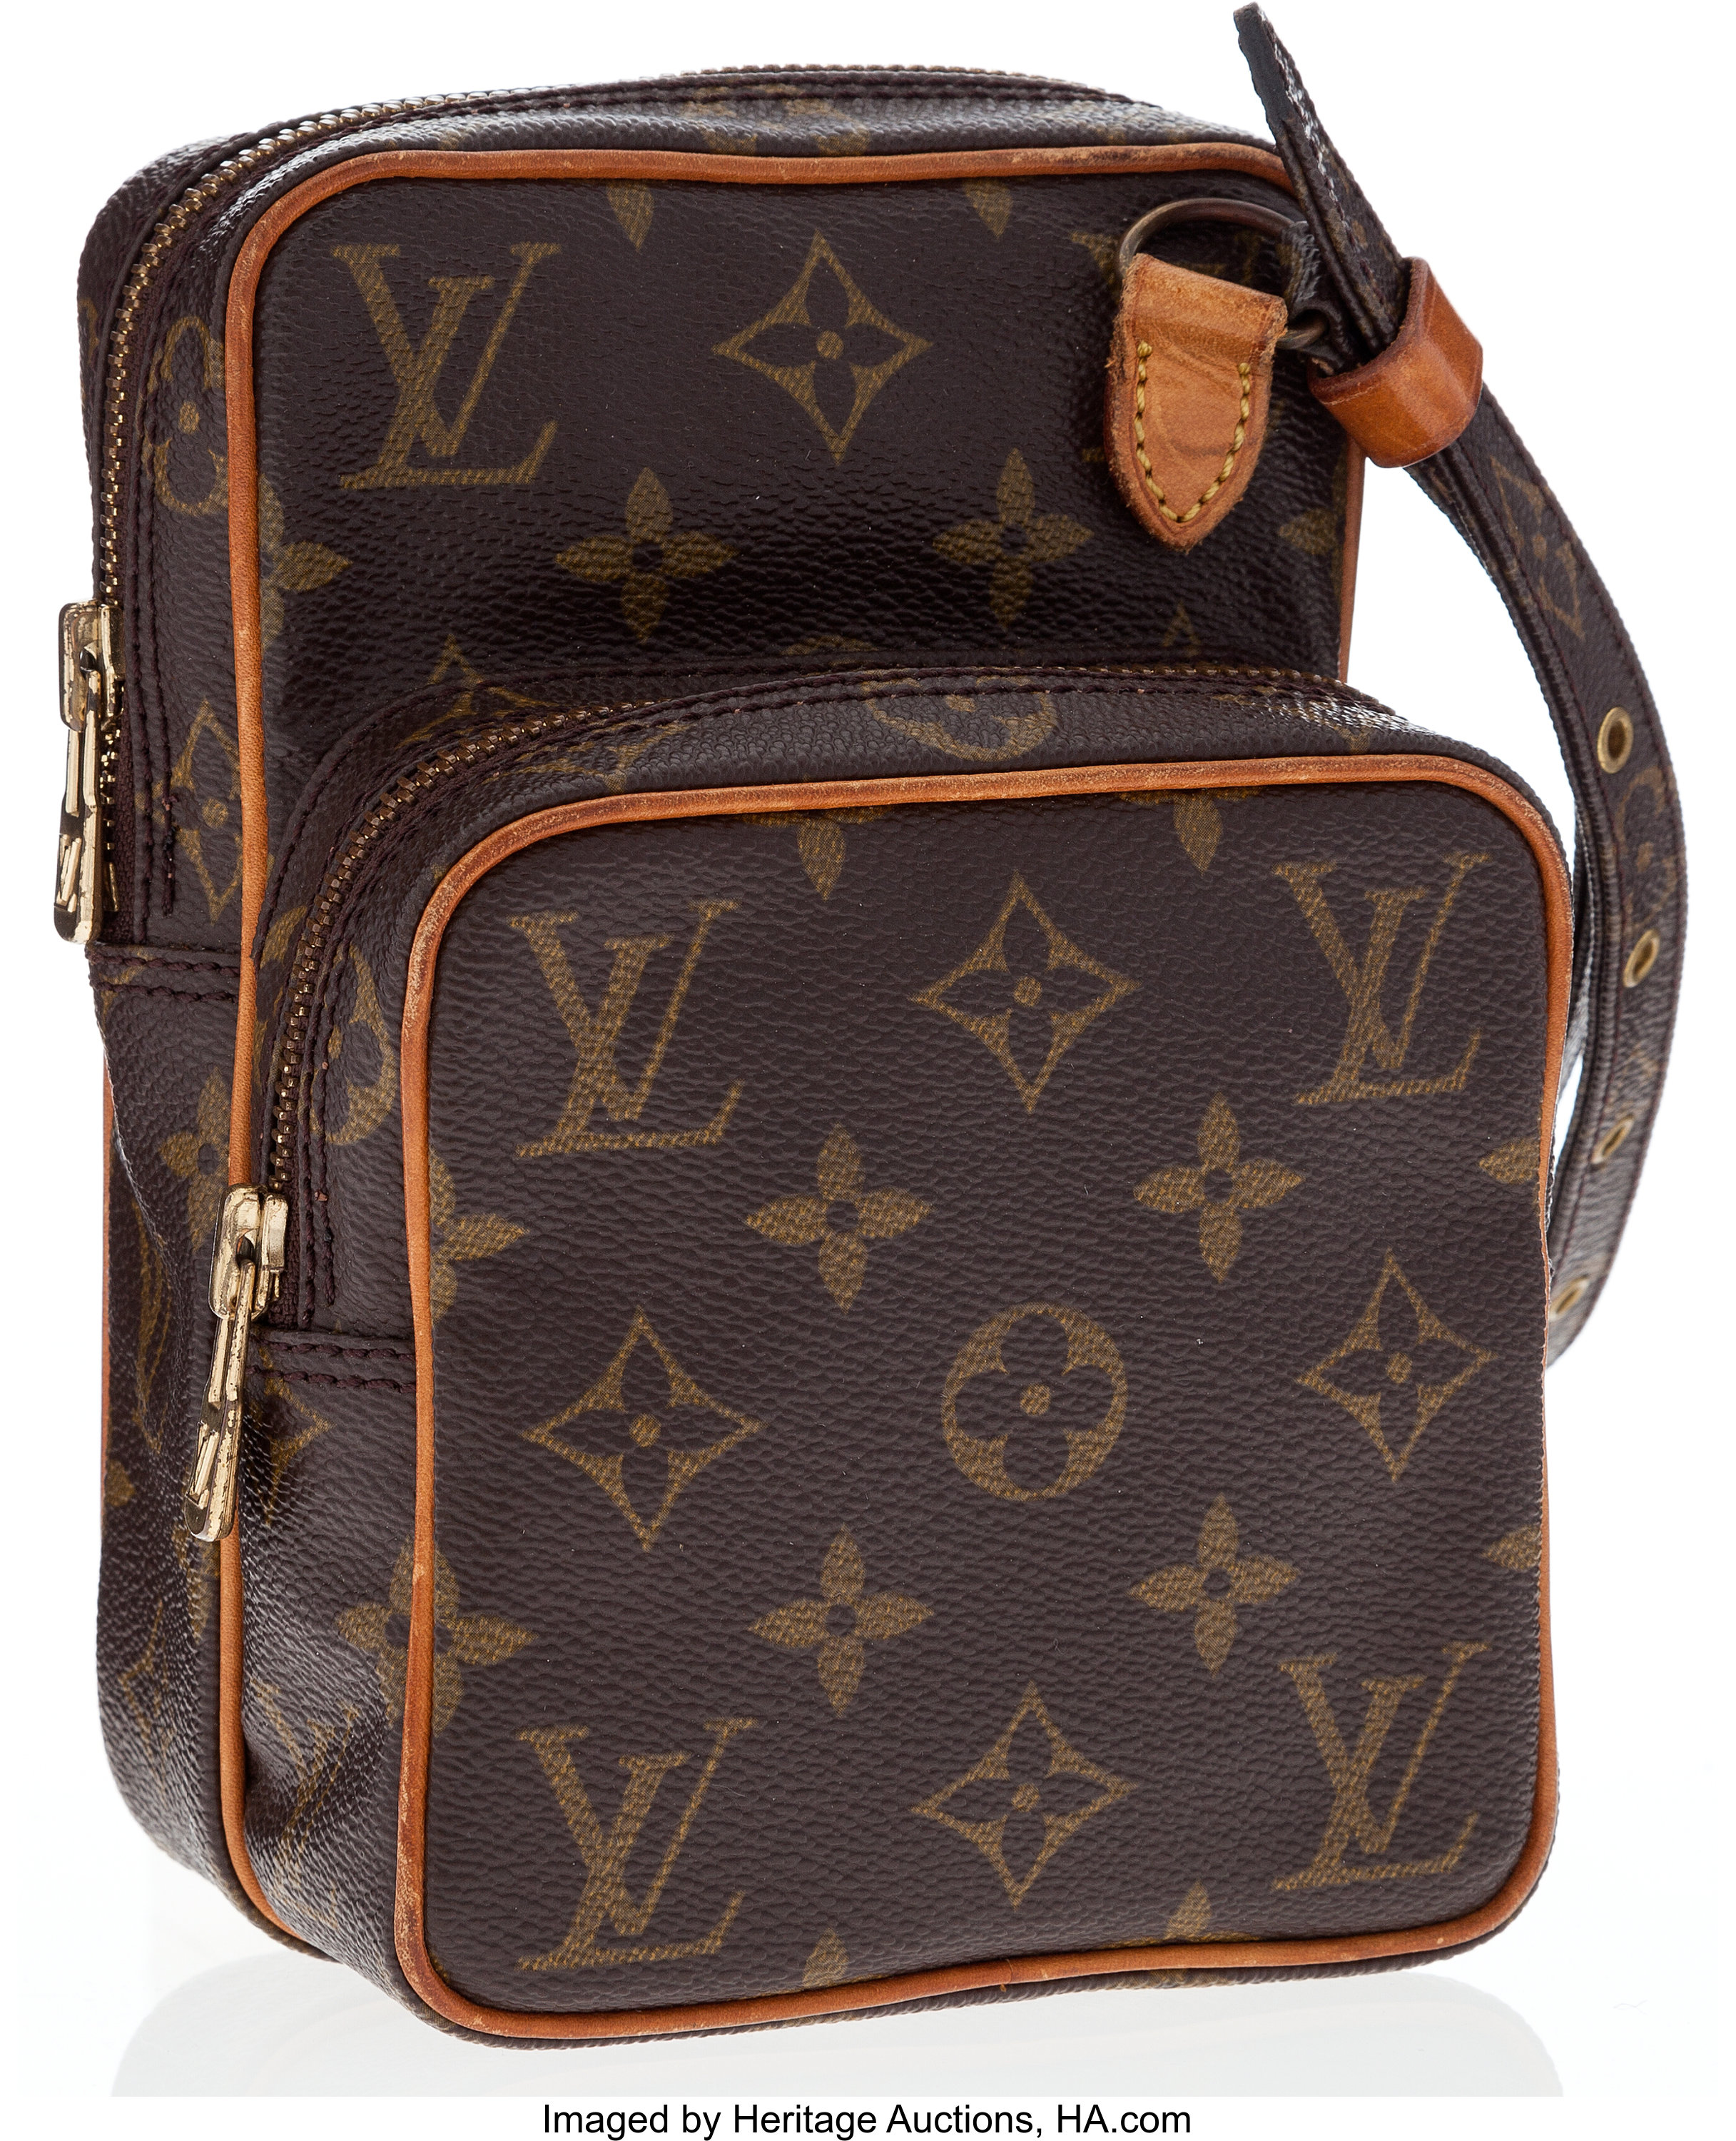 Sold at Auction: AUTHENTIC LOUIS VUITTON VINTAGE TAIGA LEATHER CLUTCH BAG